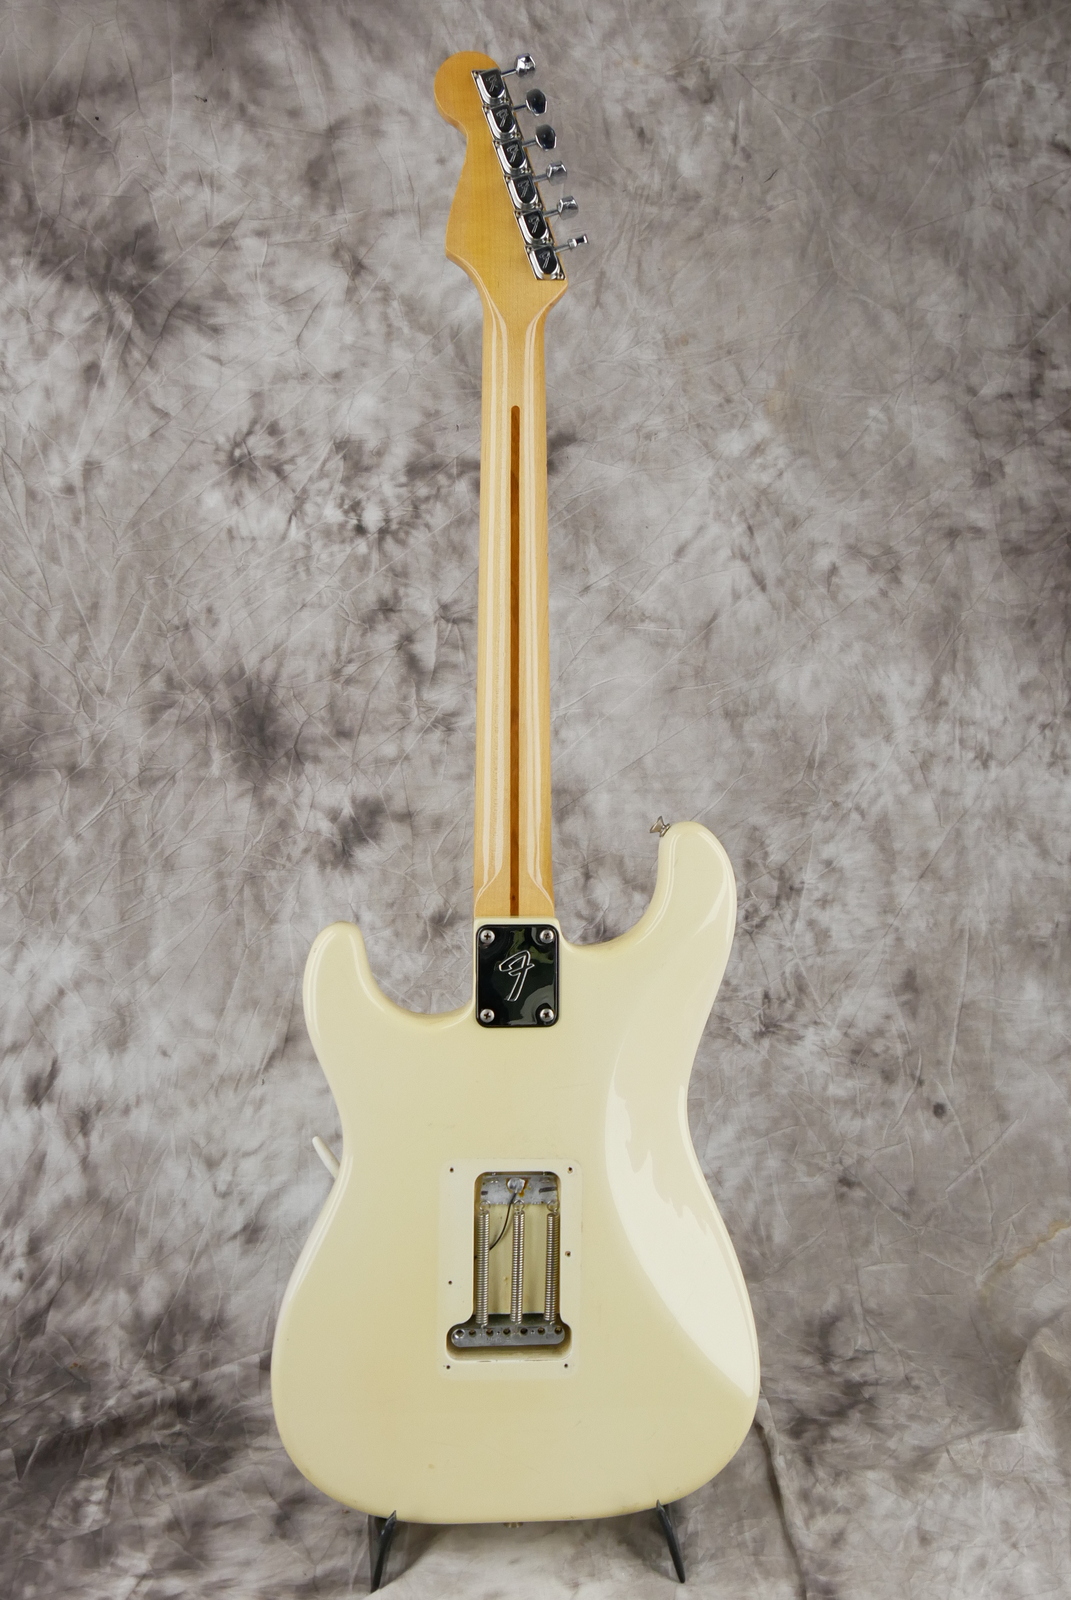 img/vintage/5303/Fender_Stratocaster_Dan_smith_1982_tremolo_hardcase-002.JPG